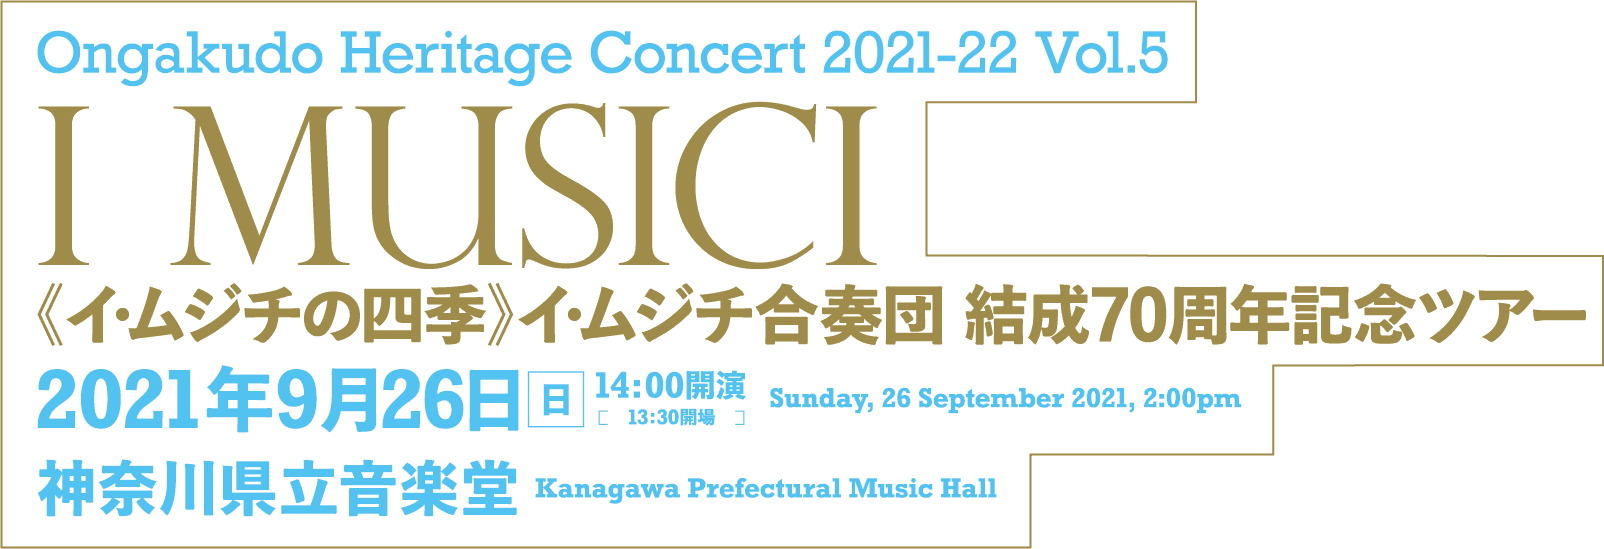 Ongakudo Heritage Concert 2021-22 Vol.5 I musici